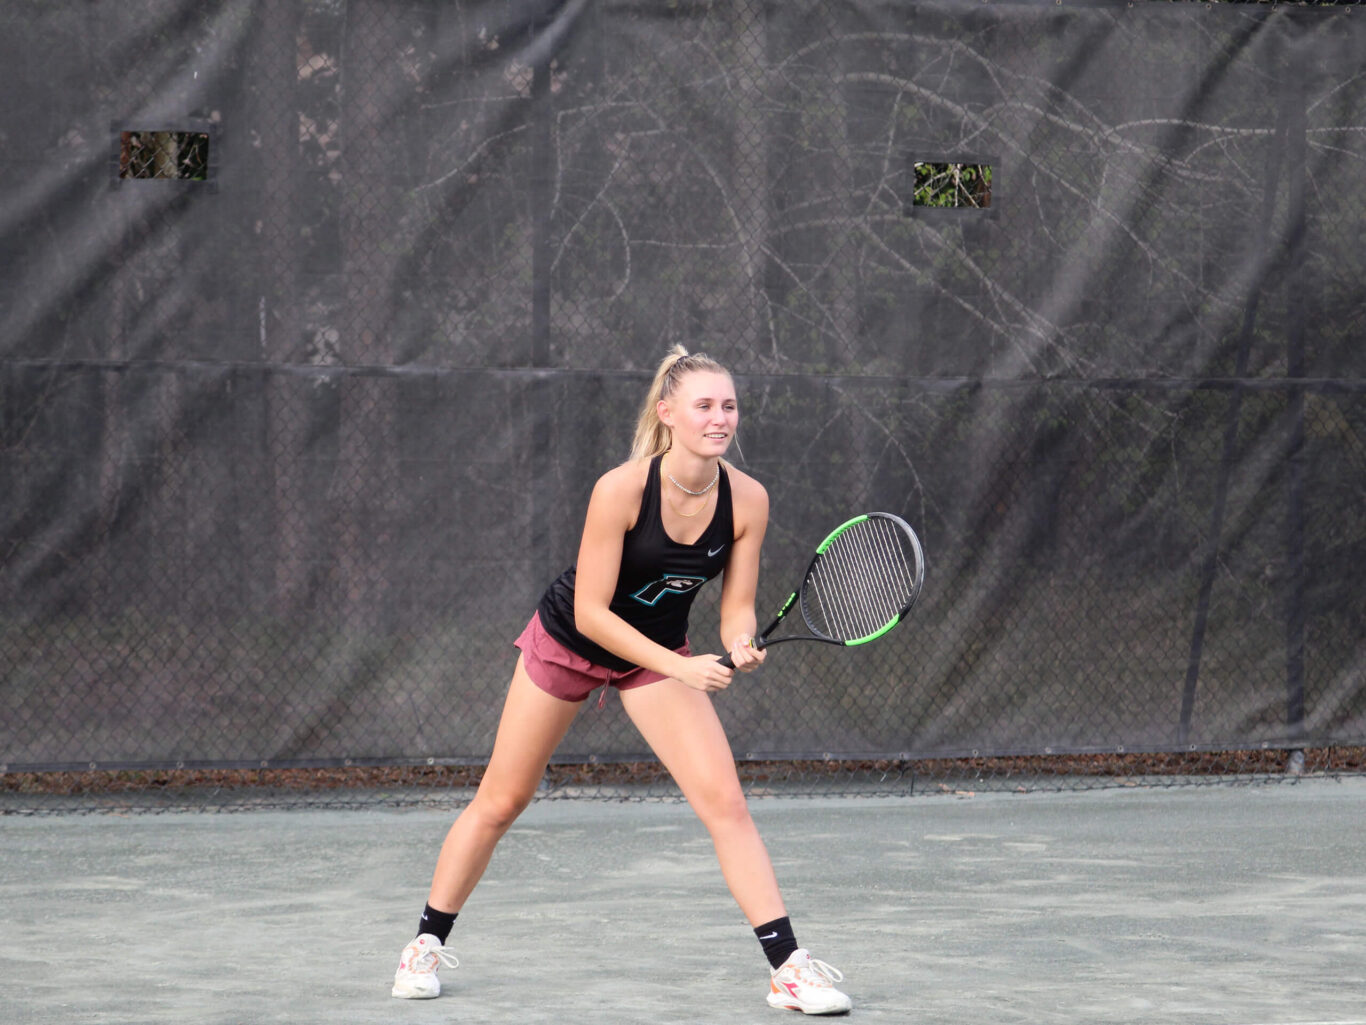 A Tennis Girl is holding a tennis racket.